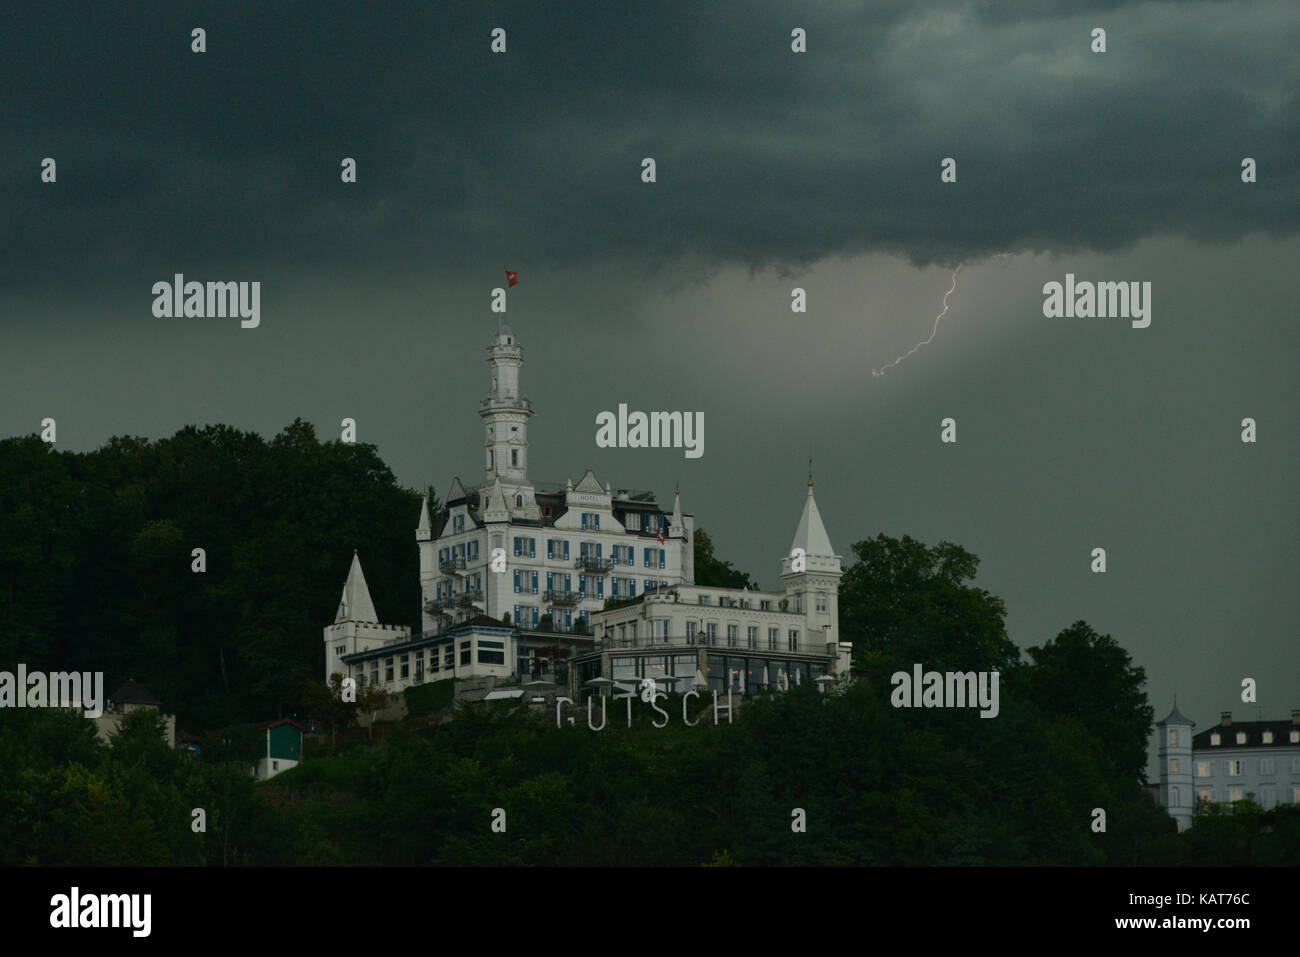 Lightning strike against a grey story sky, over the Gutsch hotel, Luzern, Switzerland Stock Photo